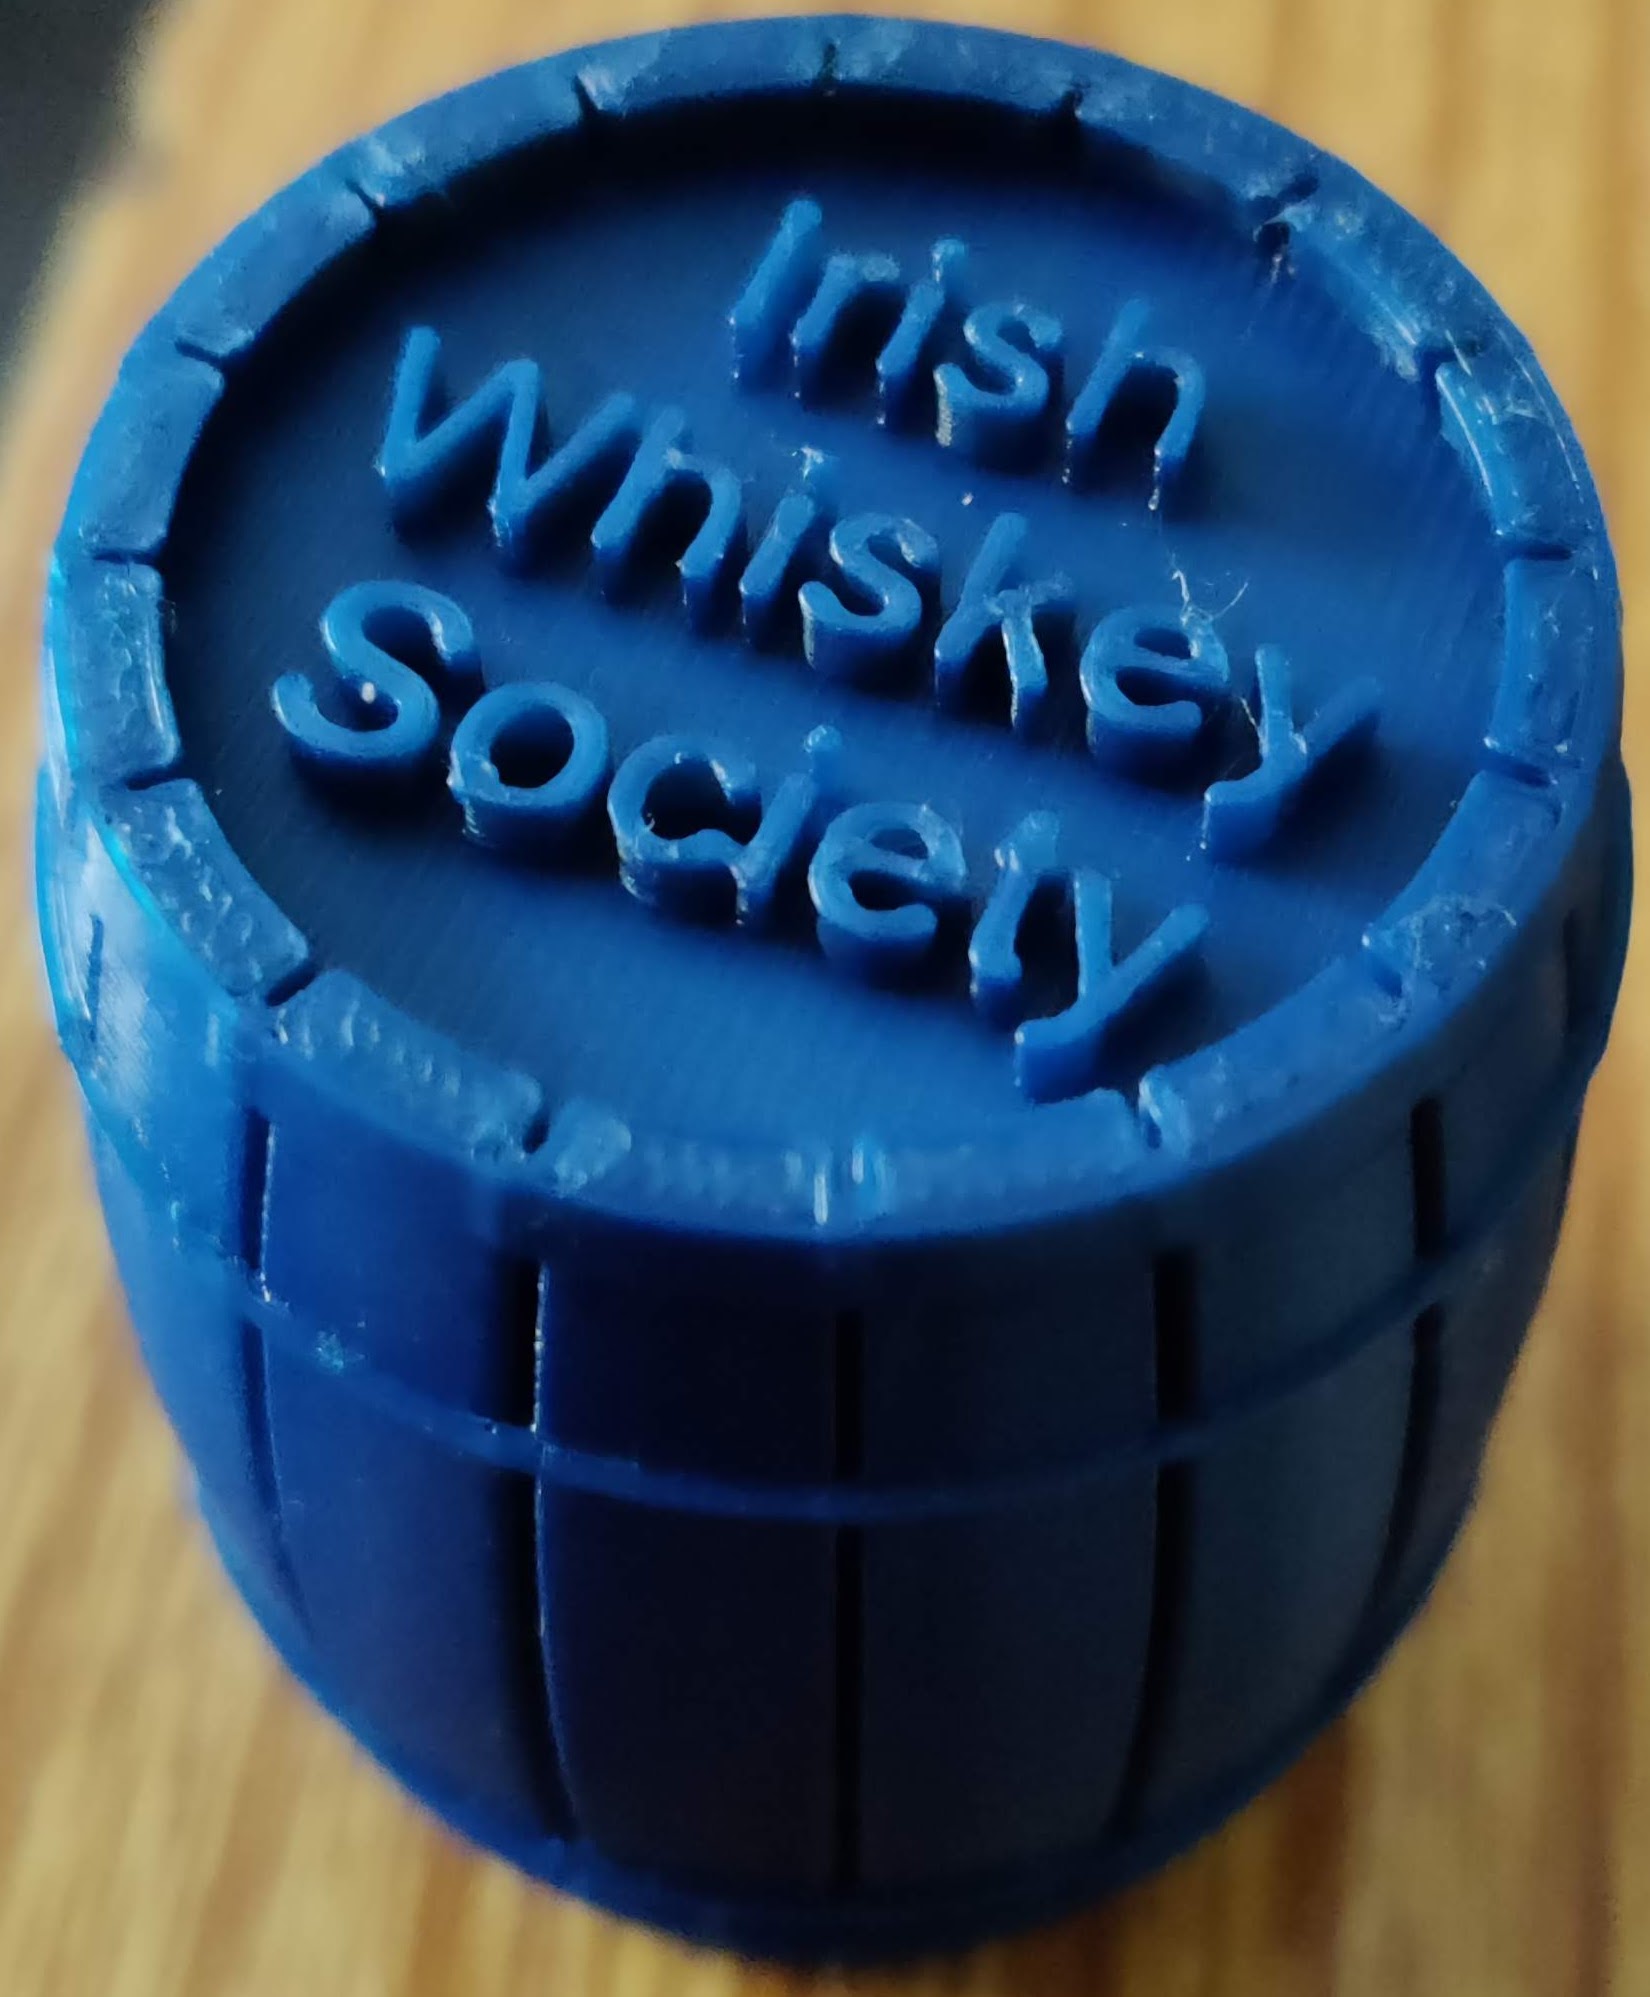 Irish Whiskey Society Barrel